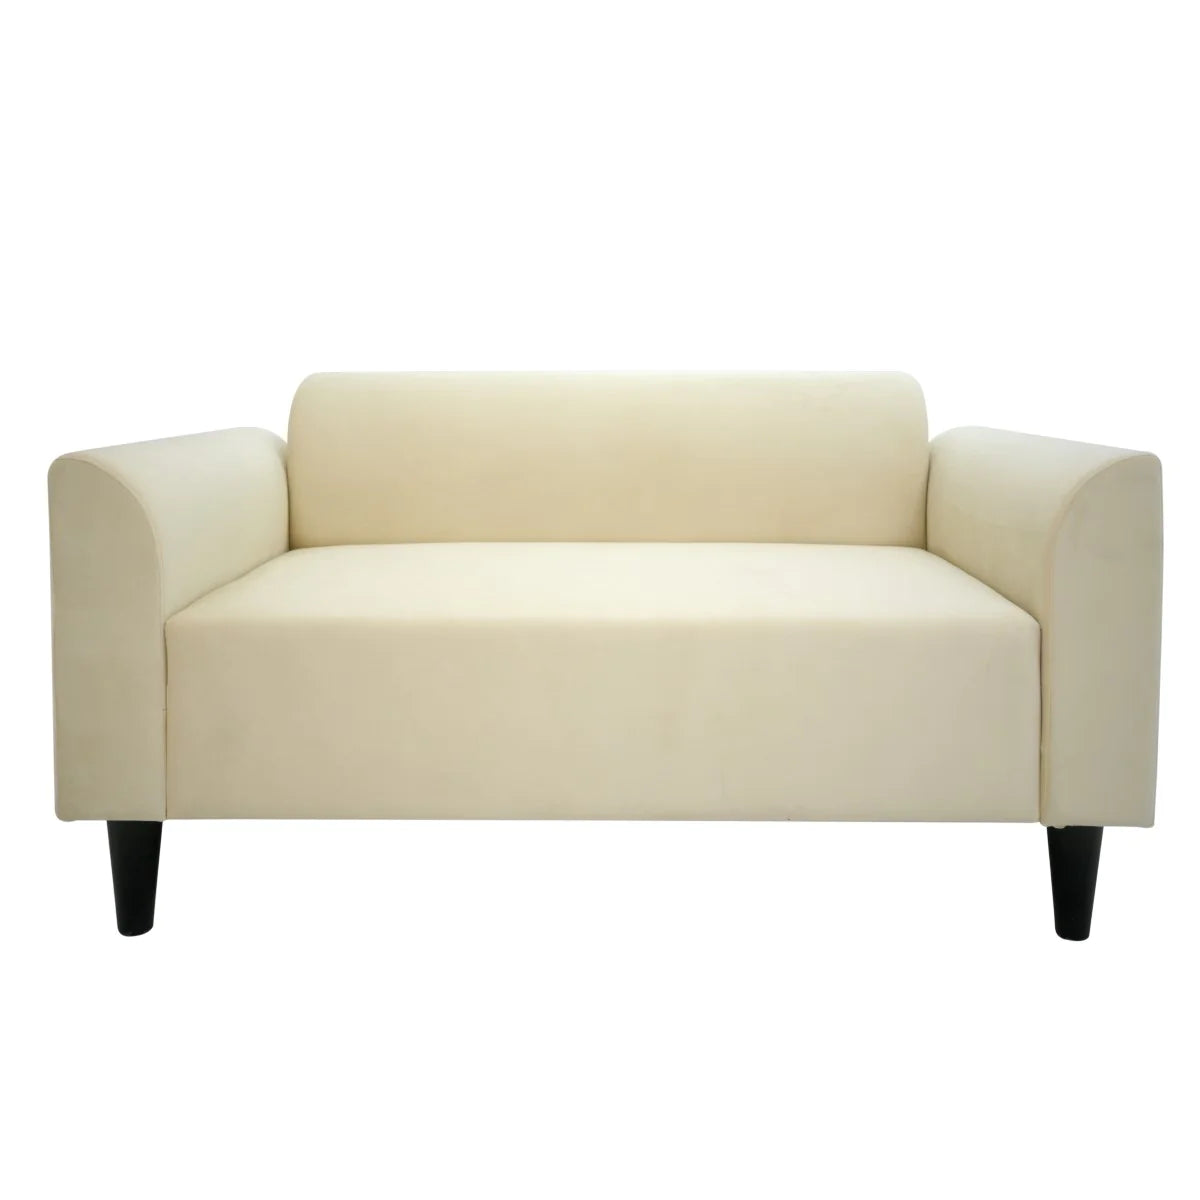 Osborne Seater Sofa (201-01) 2+3 Seater Set Bundle